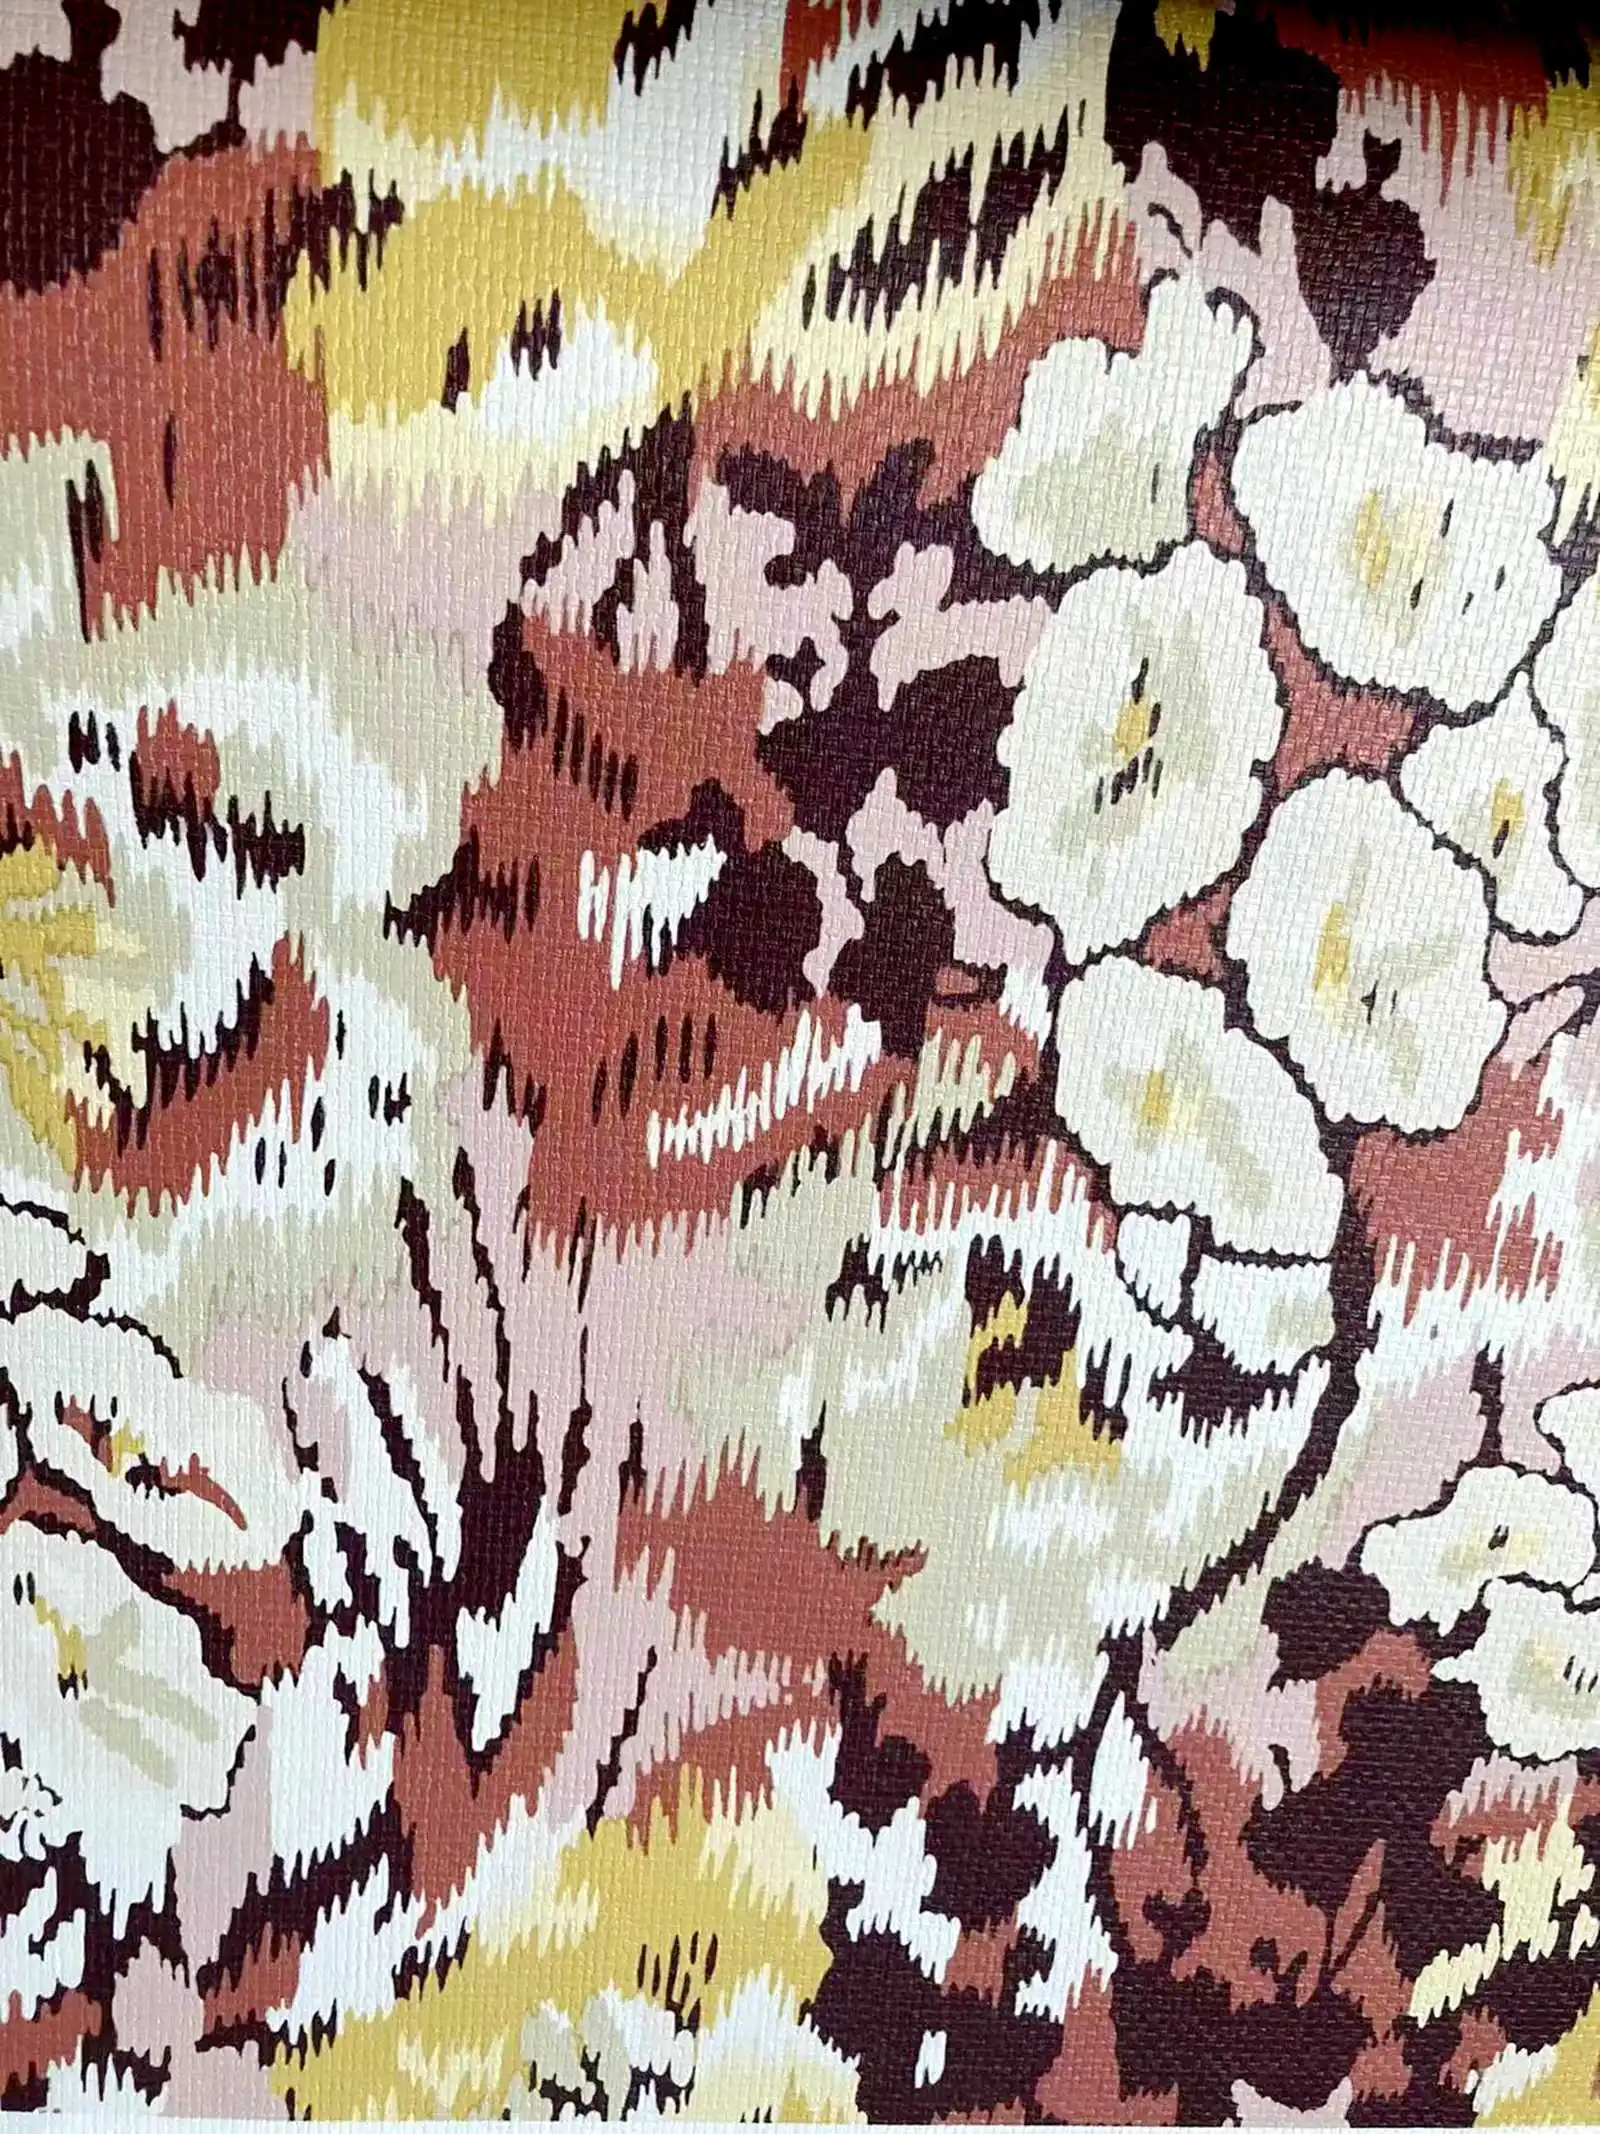 FLOWER POT WALLPAPER, HandDrawn Watercolor Paint Wallpaper, Oilpaint Wall, Fabric texture Wall covering